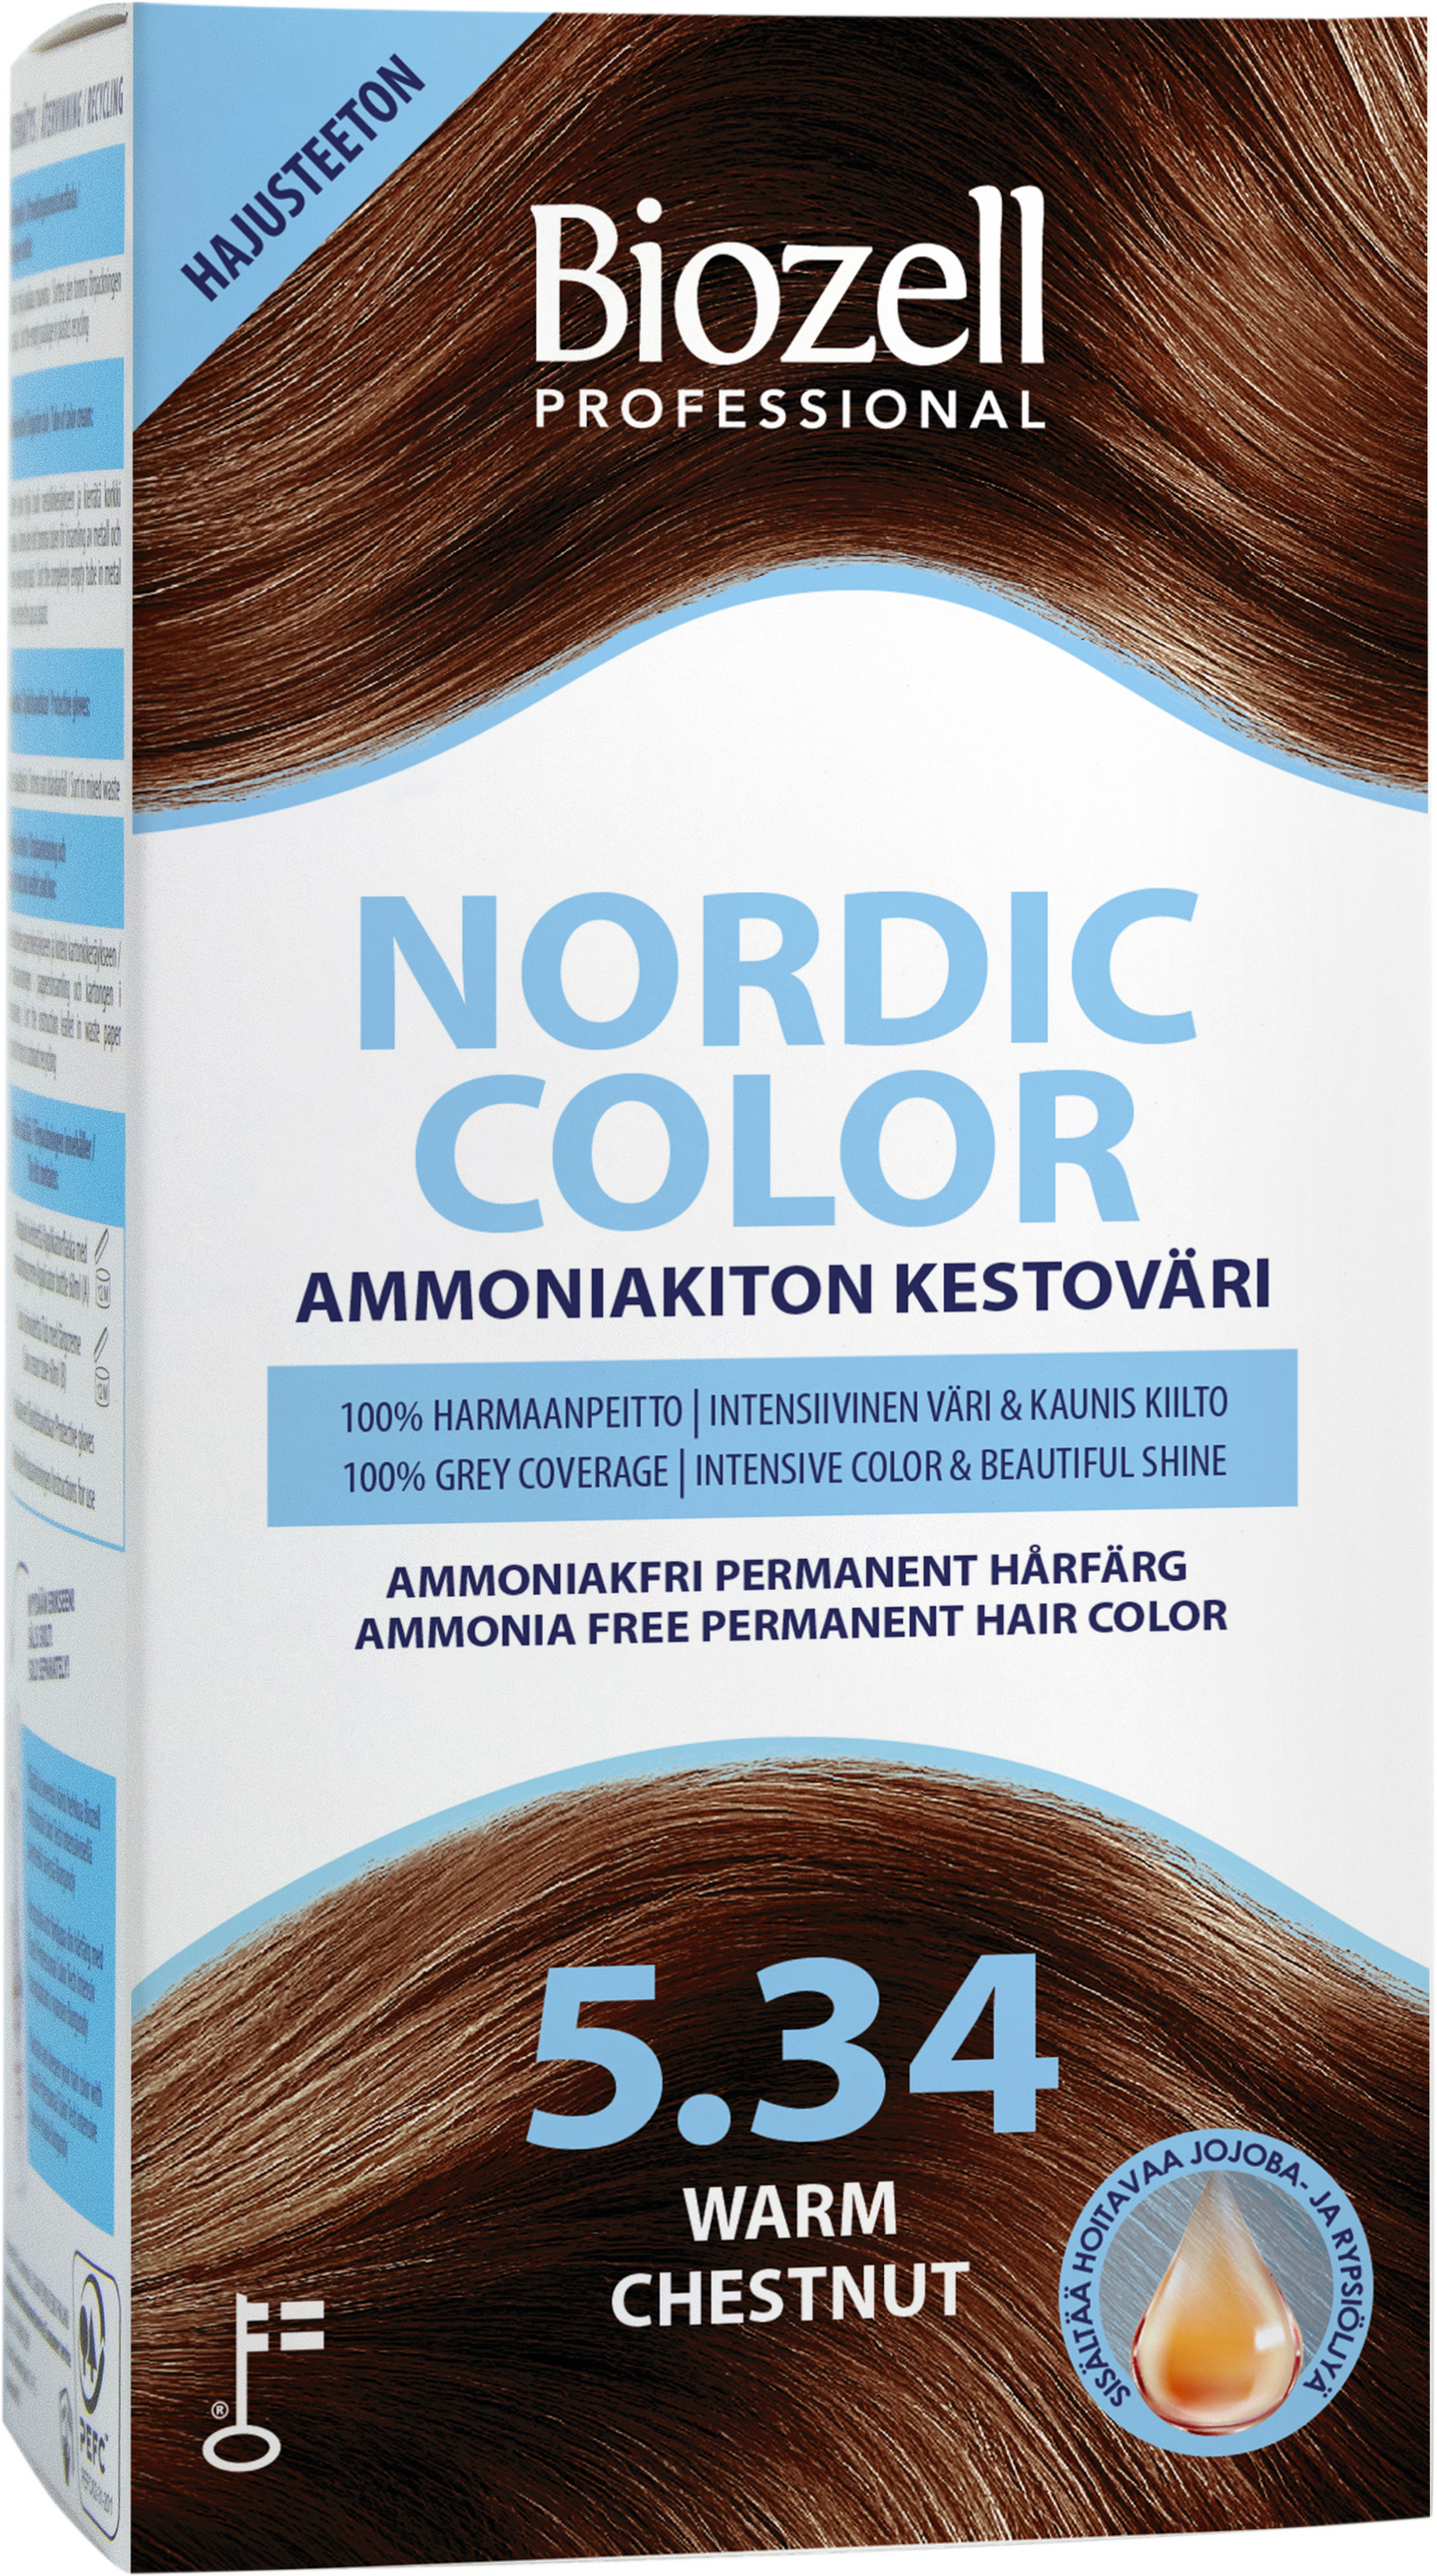 Biozell Professional Nordic Color kestoväri 5.34 2x60ml Warm Chestnut ammoniakiton